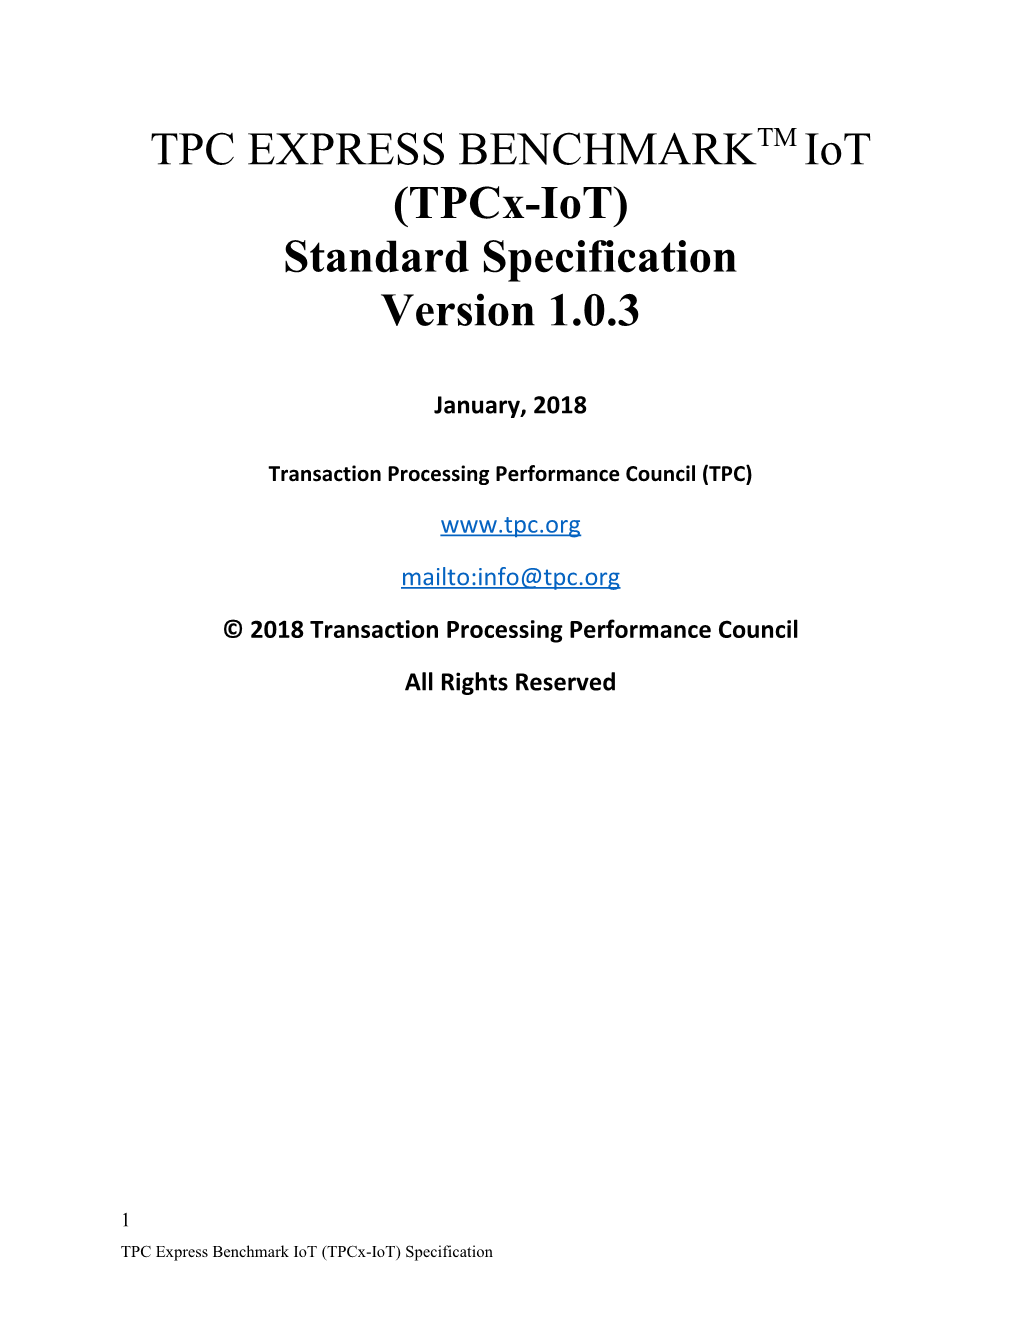 Transaction Processing Performance Council (TPC)